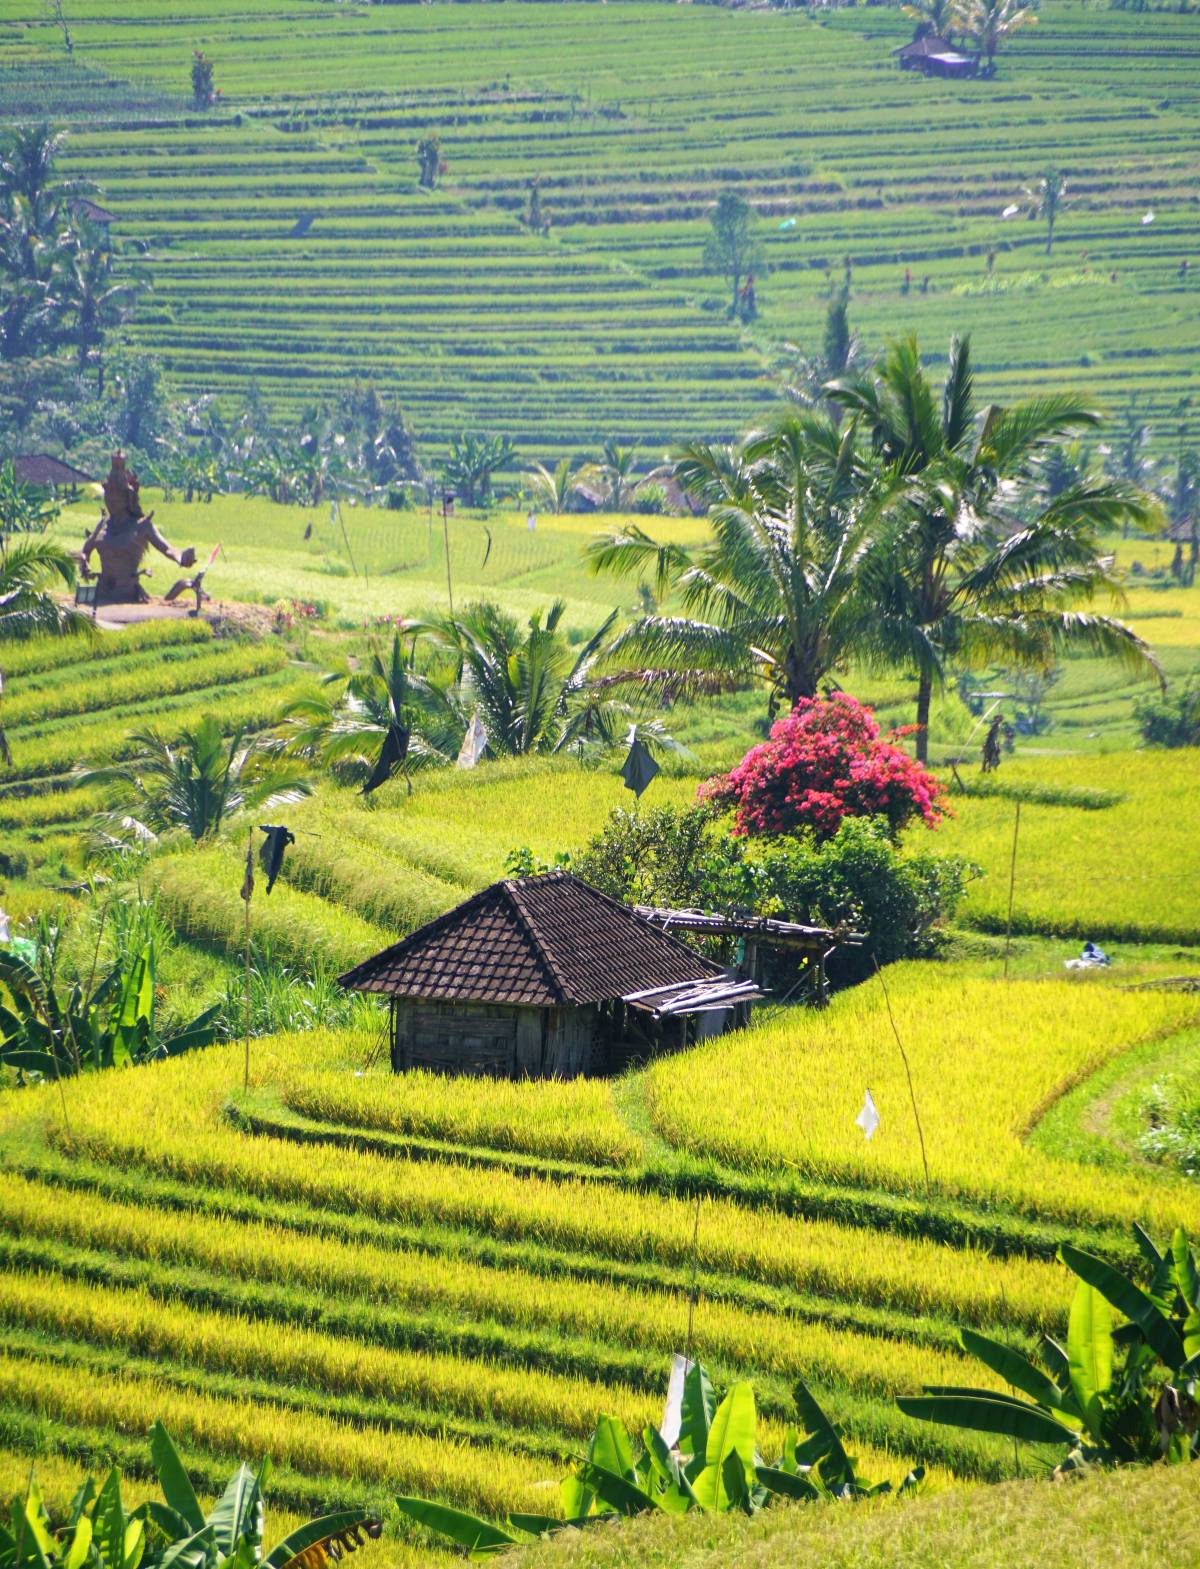 ReOpening of Bali to International Tourists